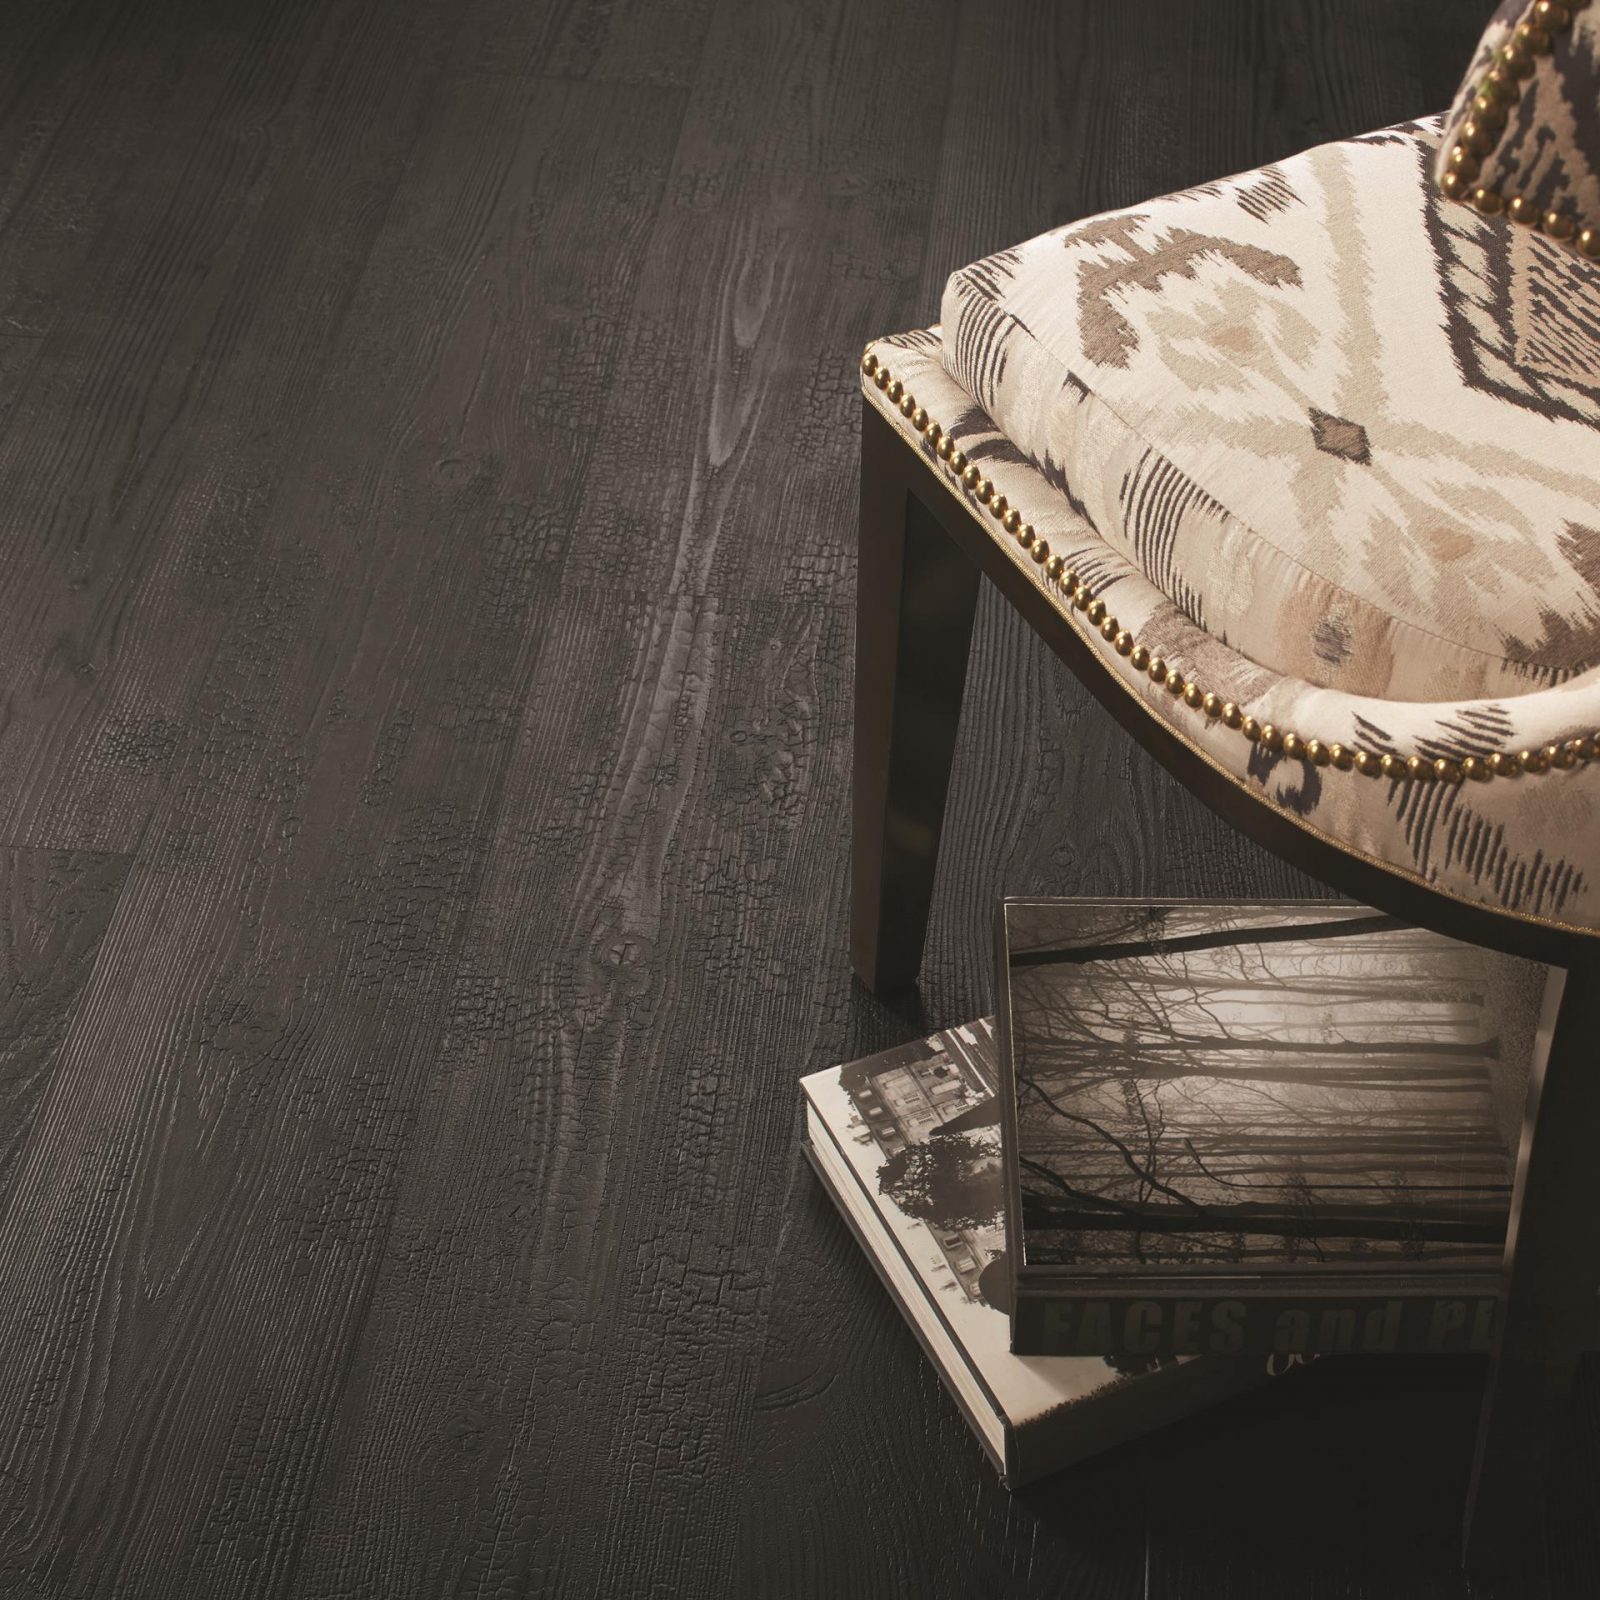 Laminate flooring | West River Carpets